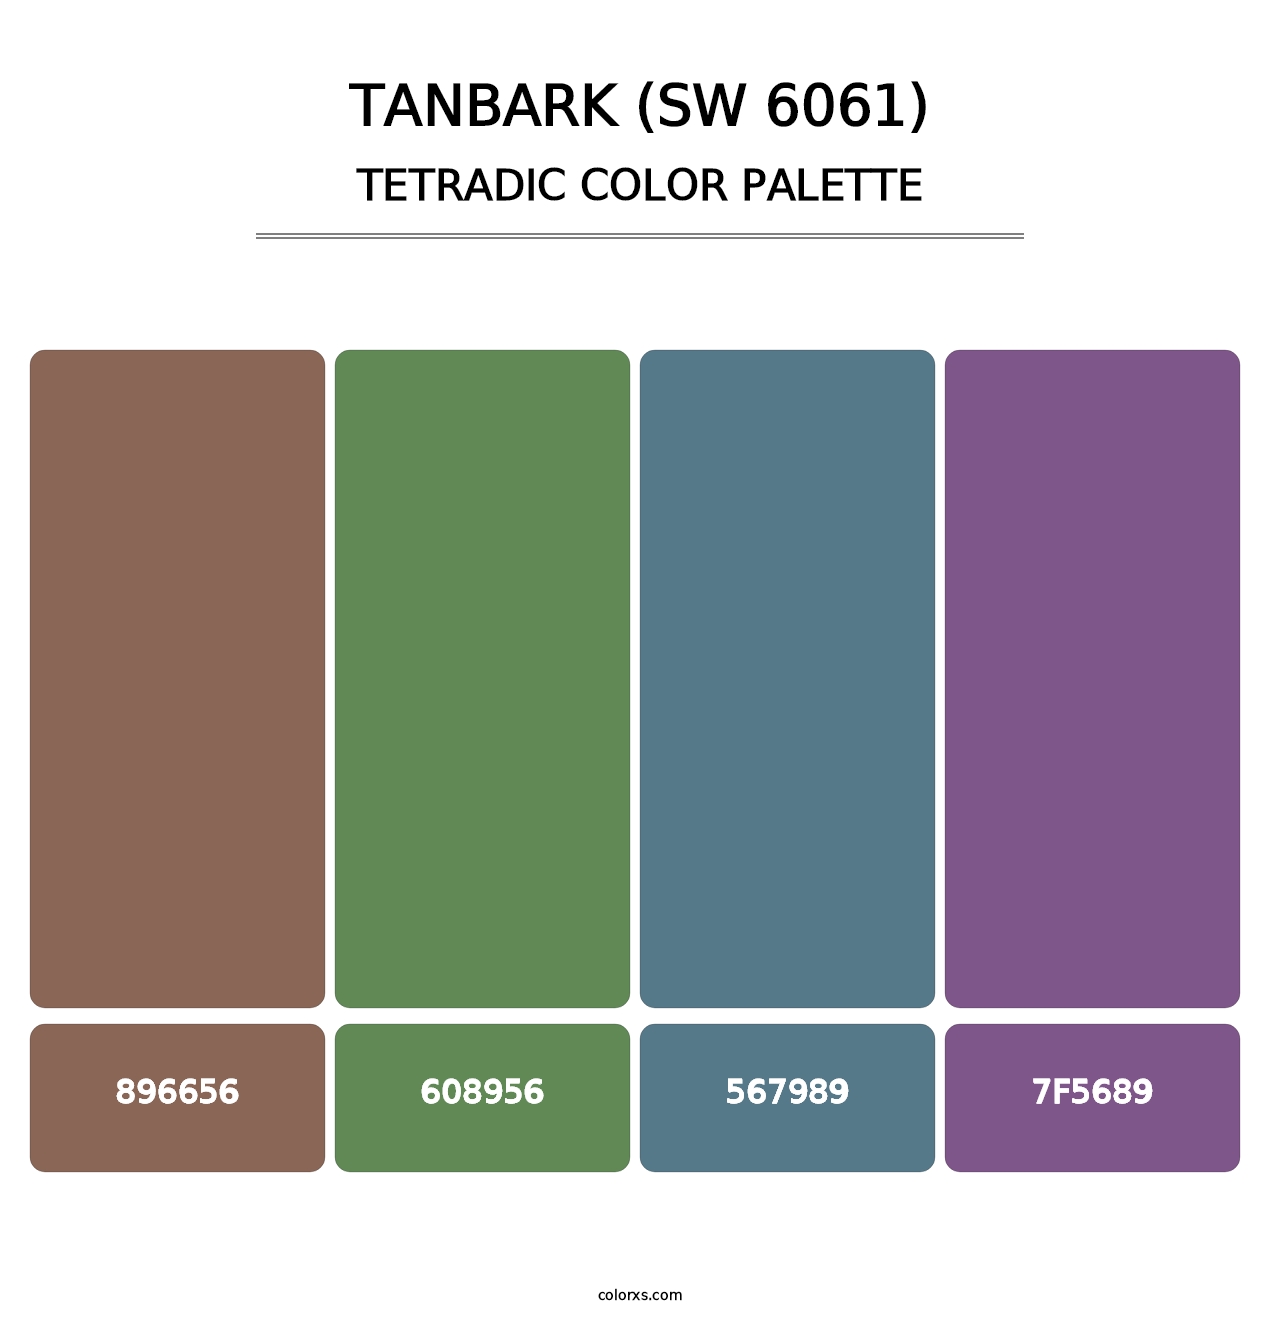 Tanbark (SW 6061) - Tetradic Color Palette